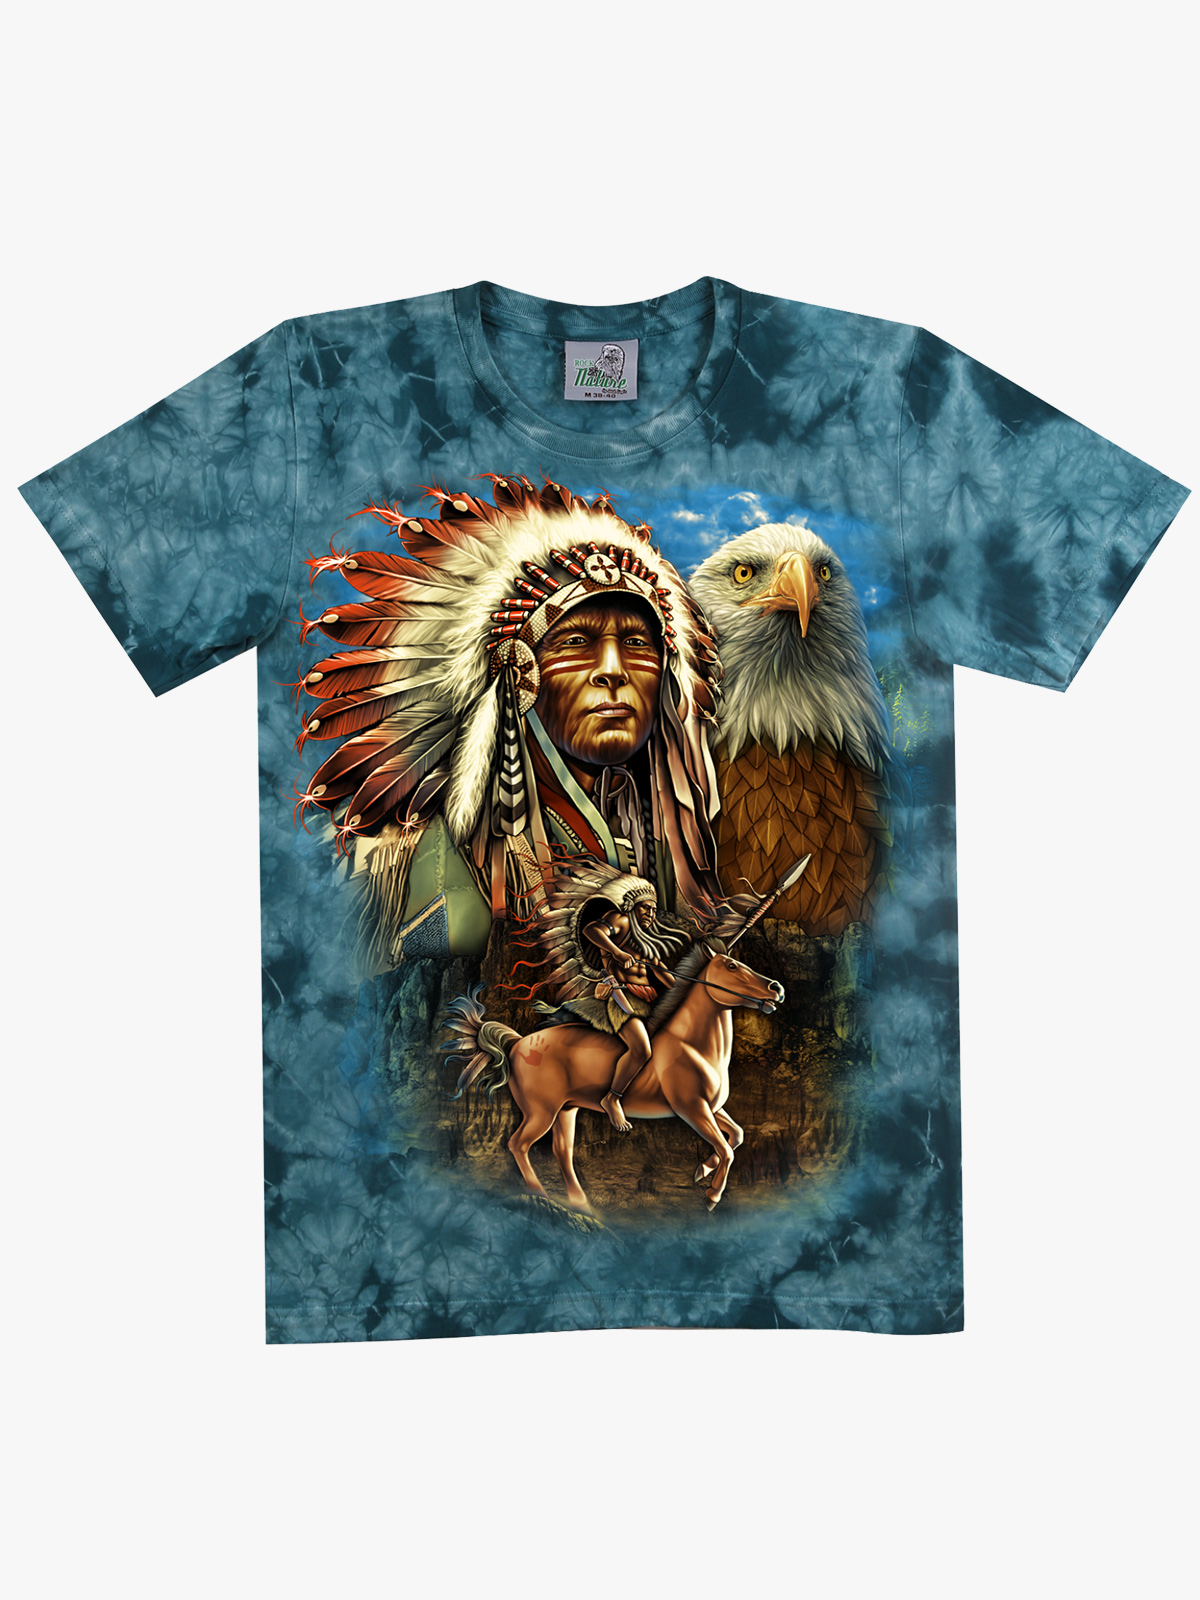 TD-388 – Rock Eagle T-Shirts – Official Site